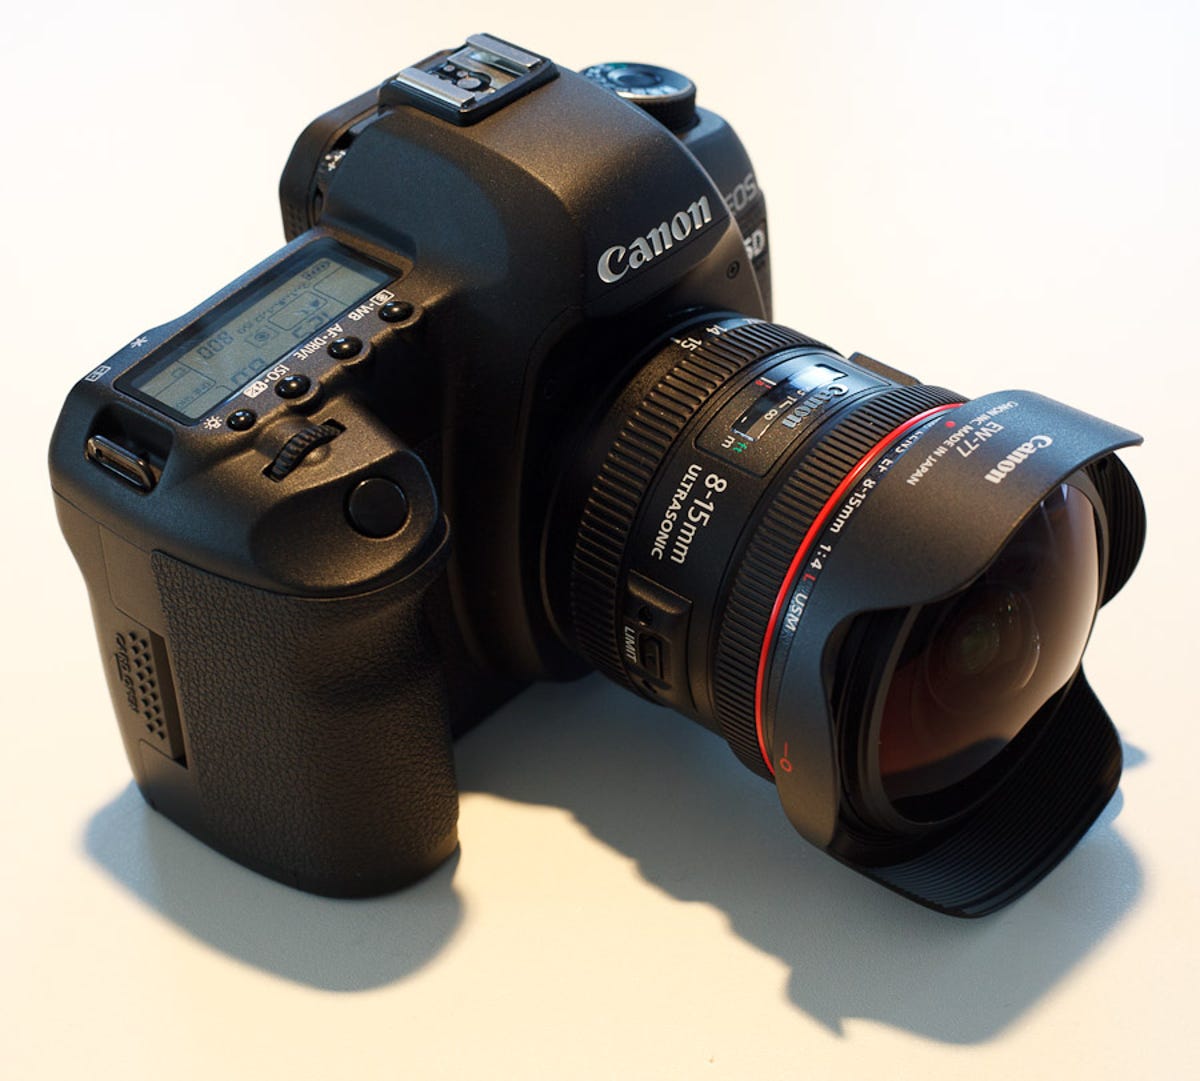 Canon's 8-15mm fisheye lens